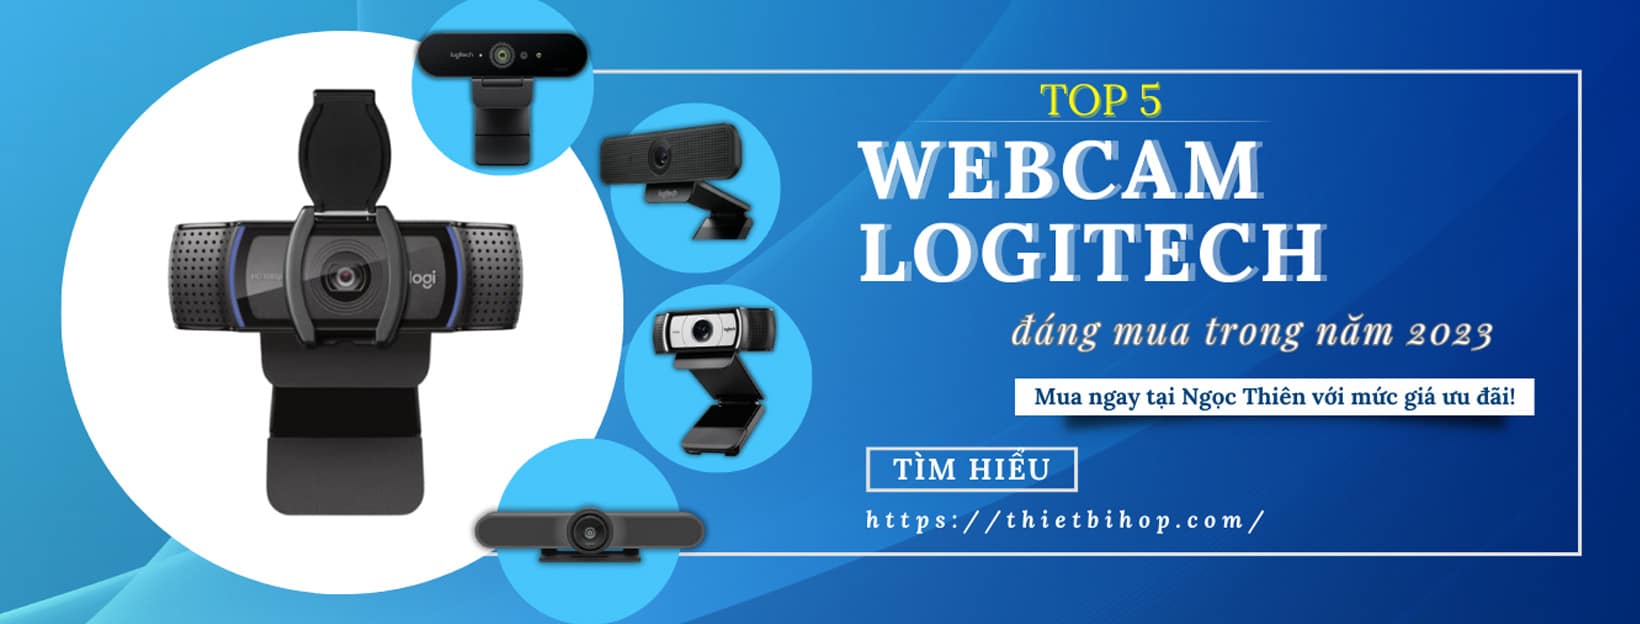 top 5 webcam logitech đáng mua năm 2023